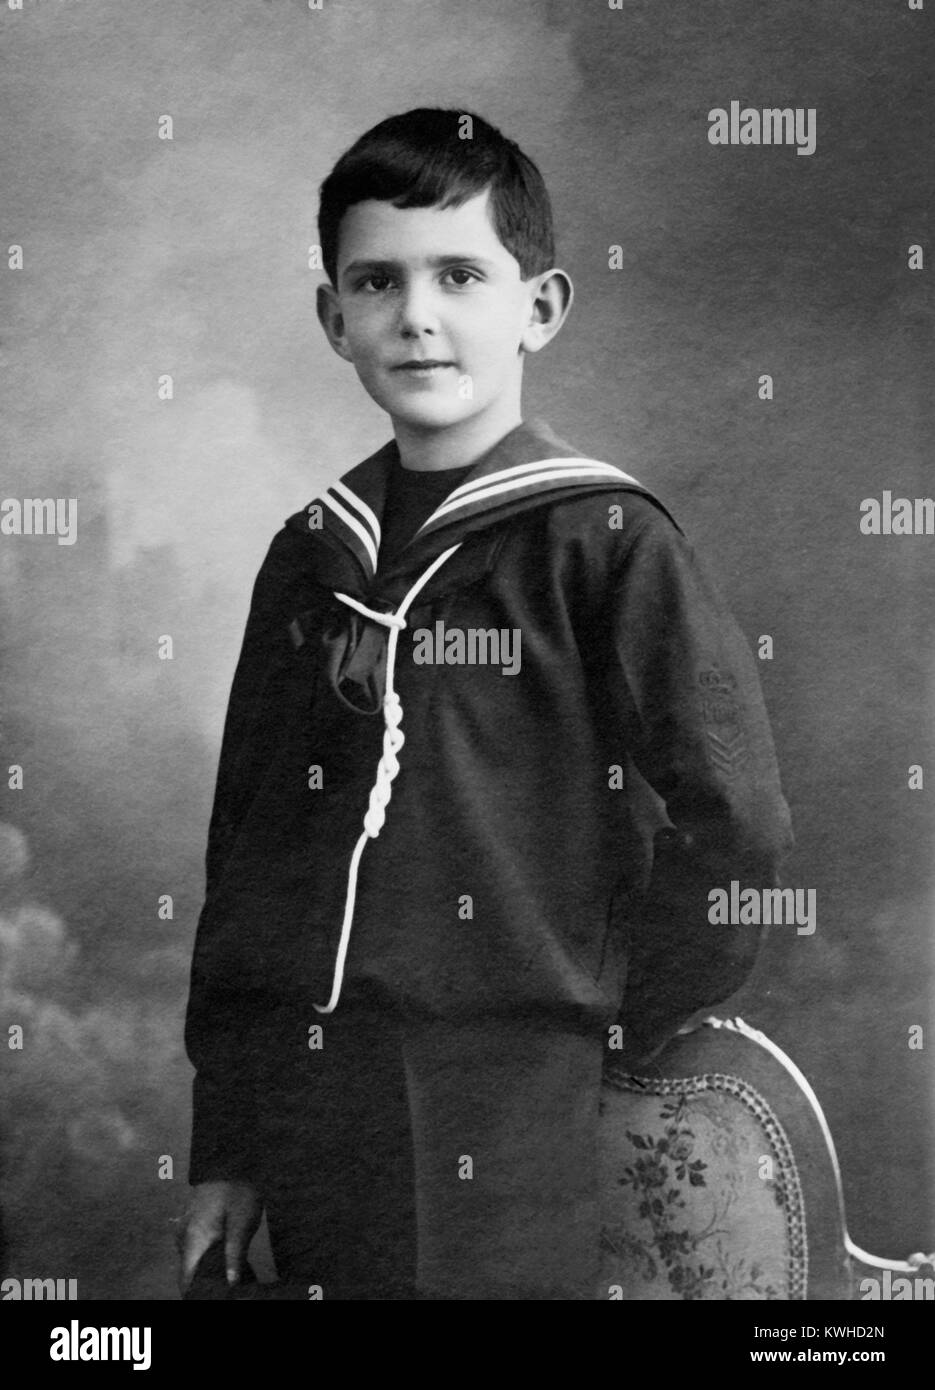 King Umberto II of Italy as a child, Umberto, Prince of Piedmont, Stock Photo